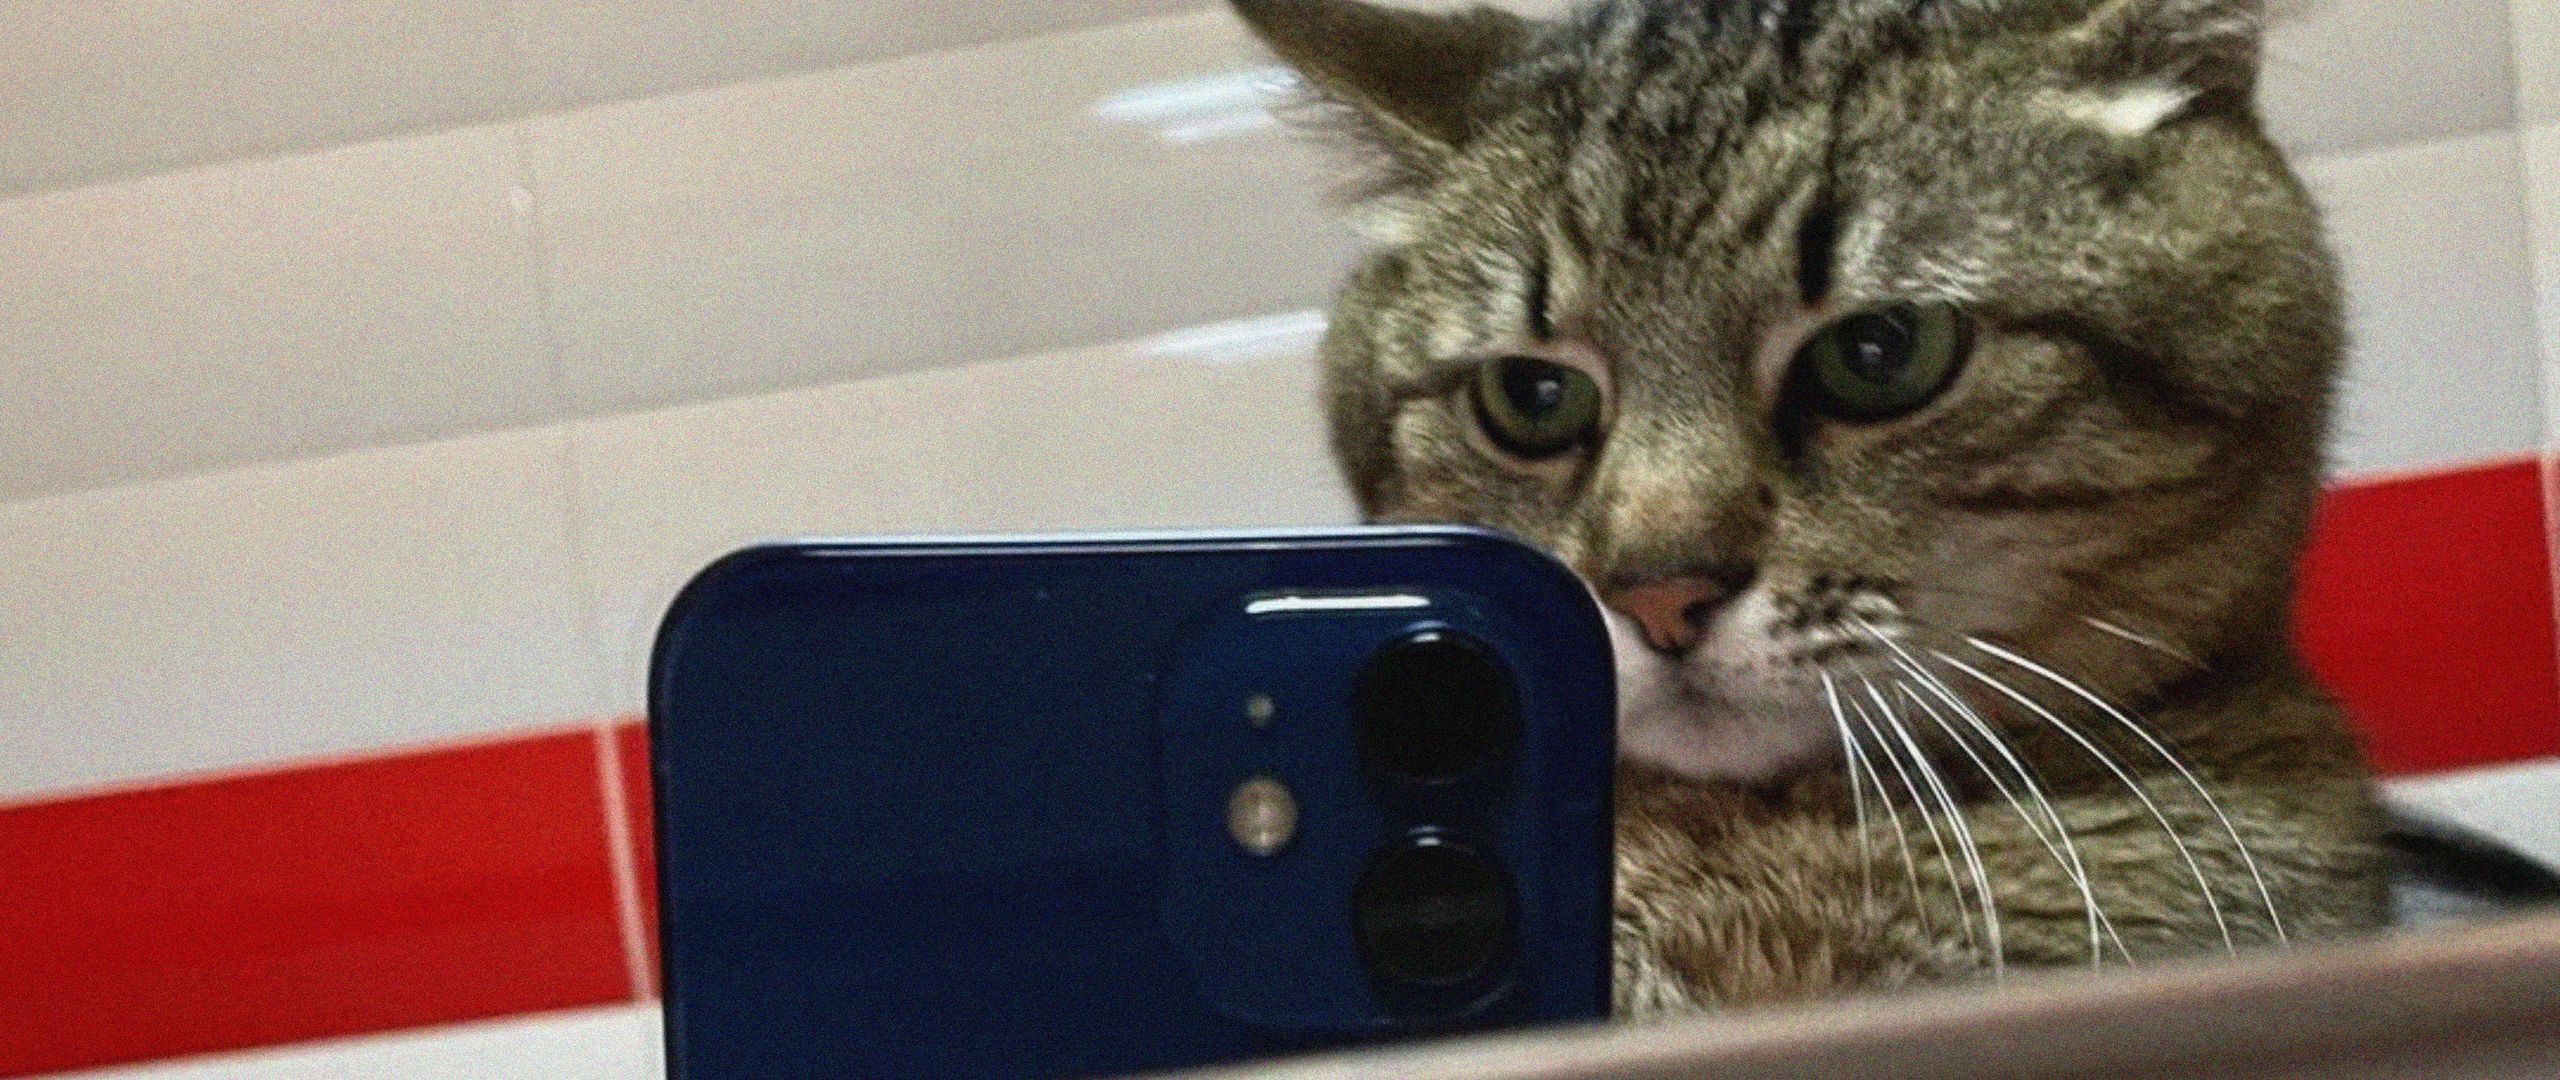 Кот с телефоном селфи